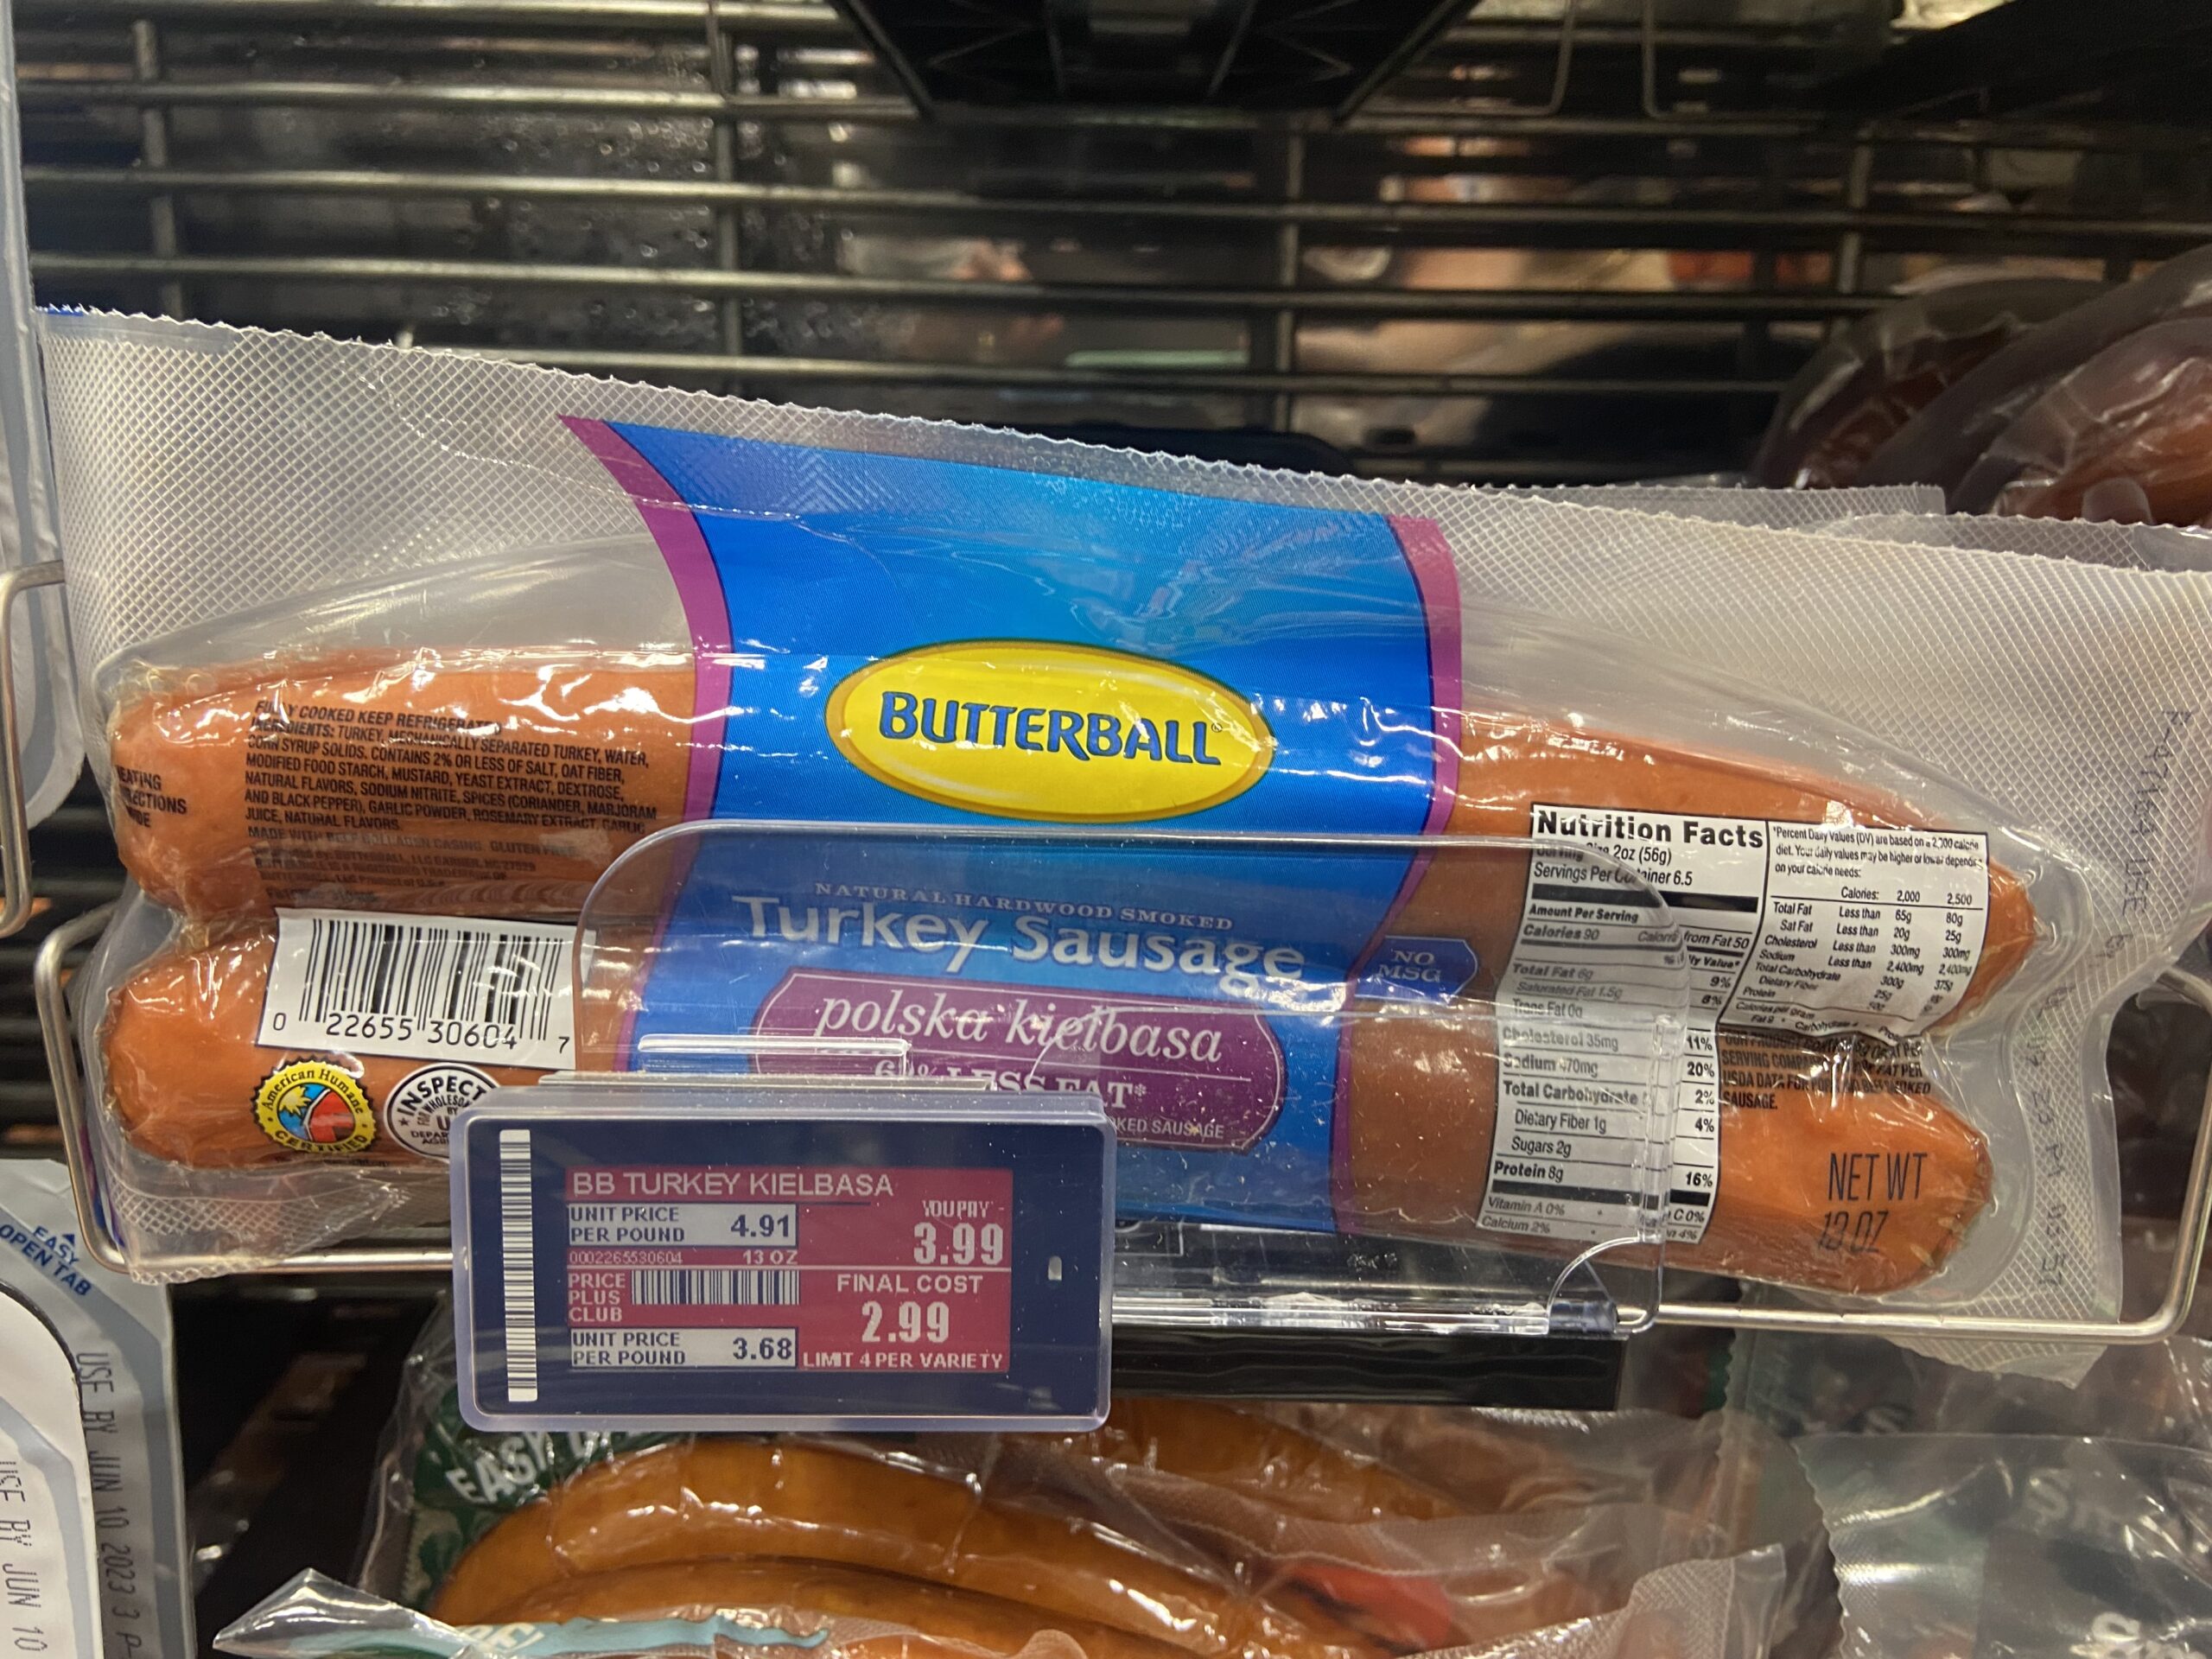 ShopRite Deal on Butterball Turkey Sausage